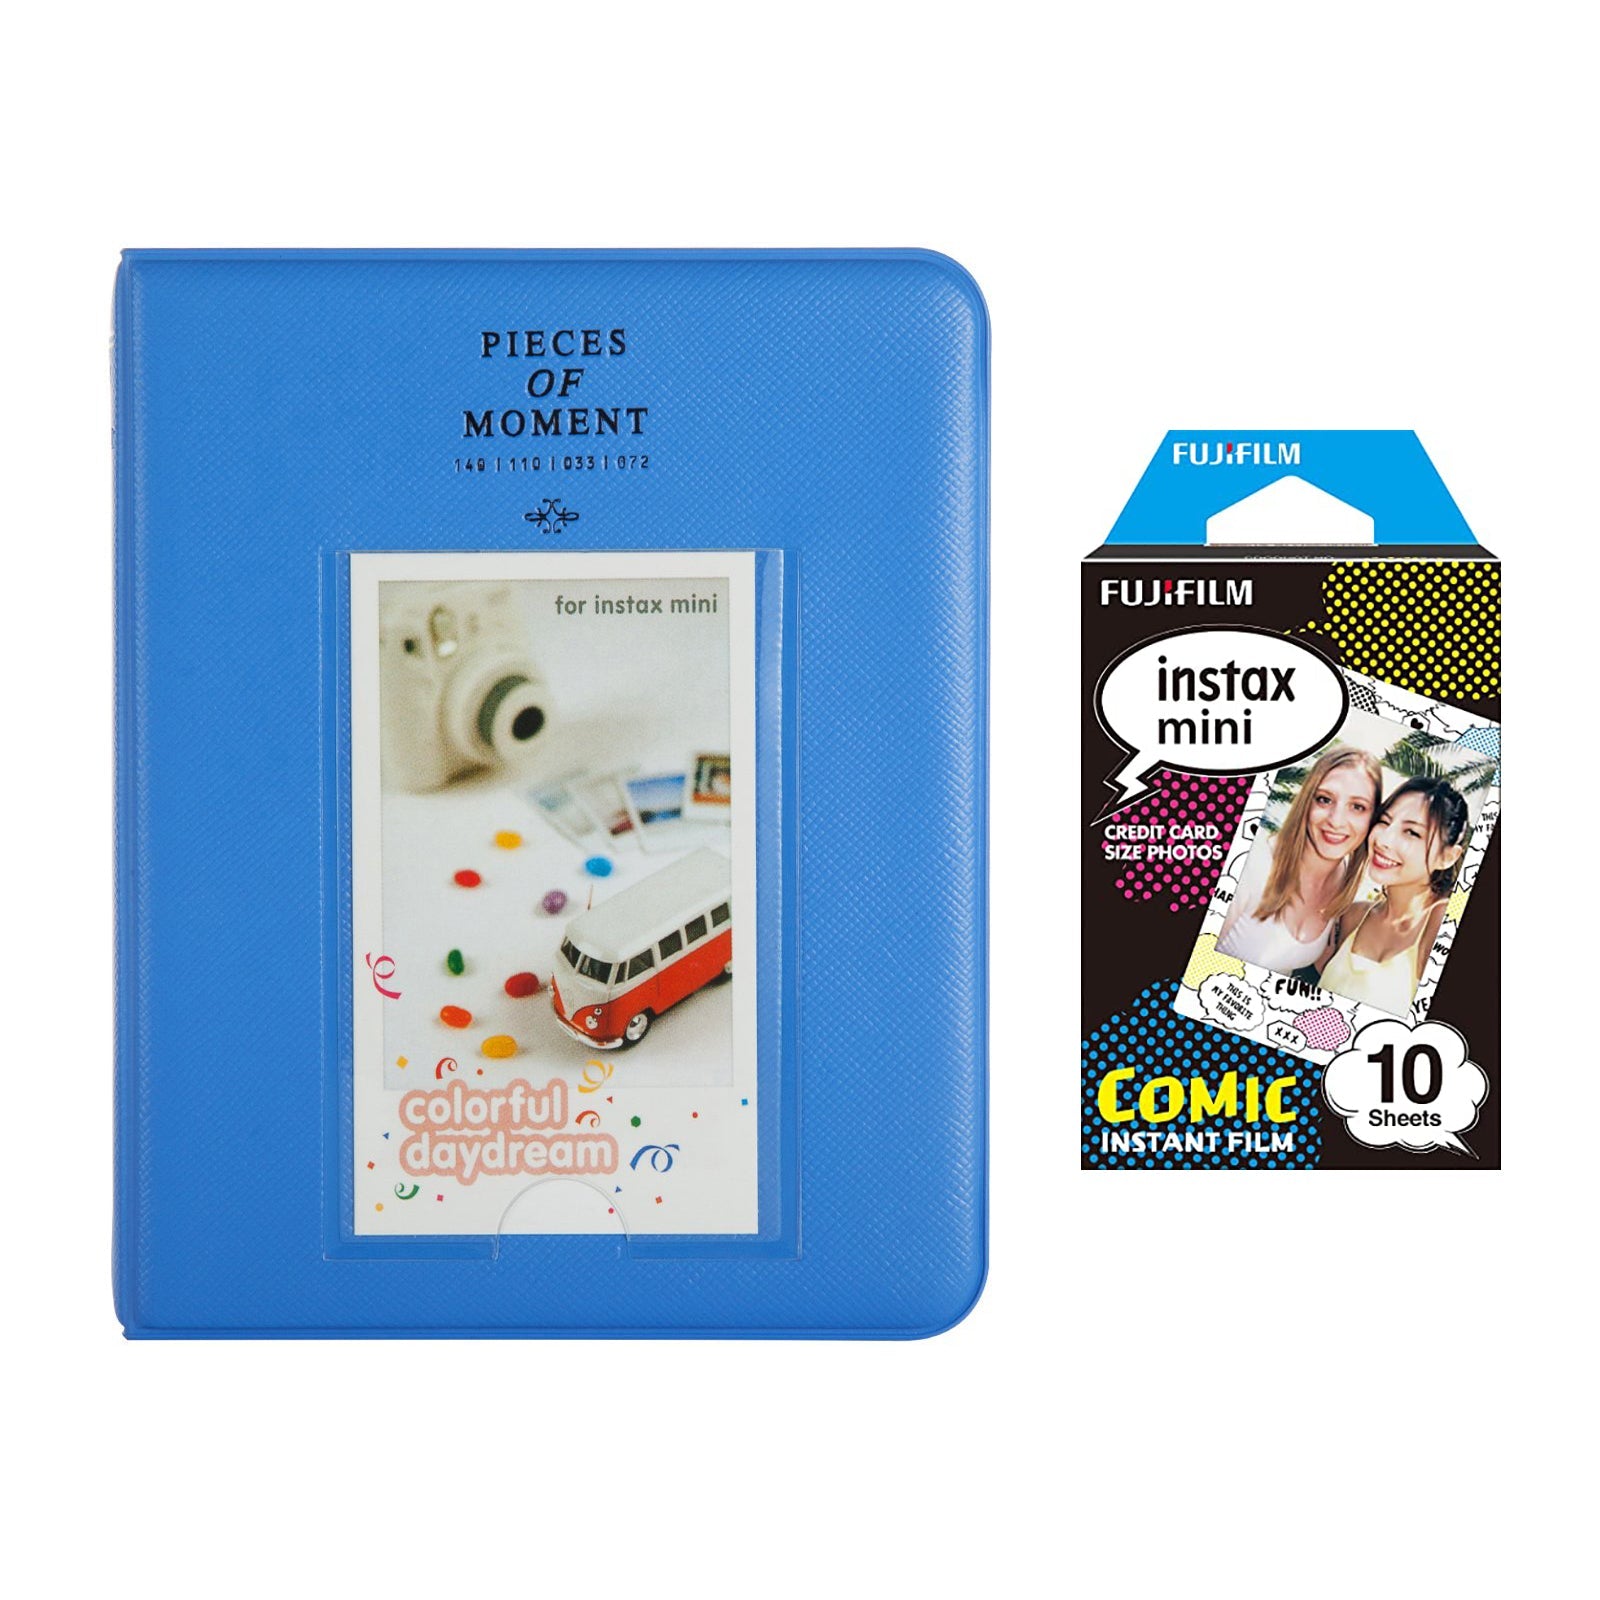 Fujifilm Instax Mini 10X1 comic Instant Film with Instax Time Photo Album 64 Sheets (cobalt blue)